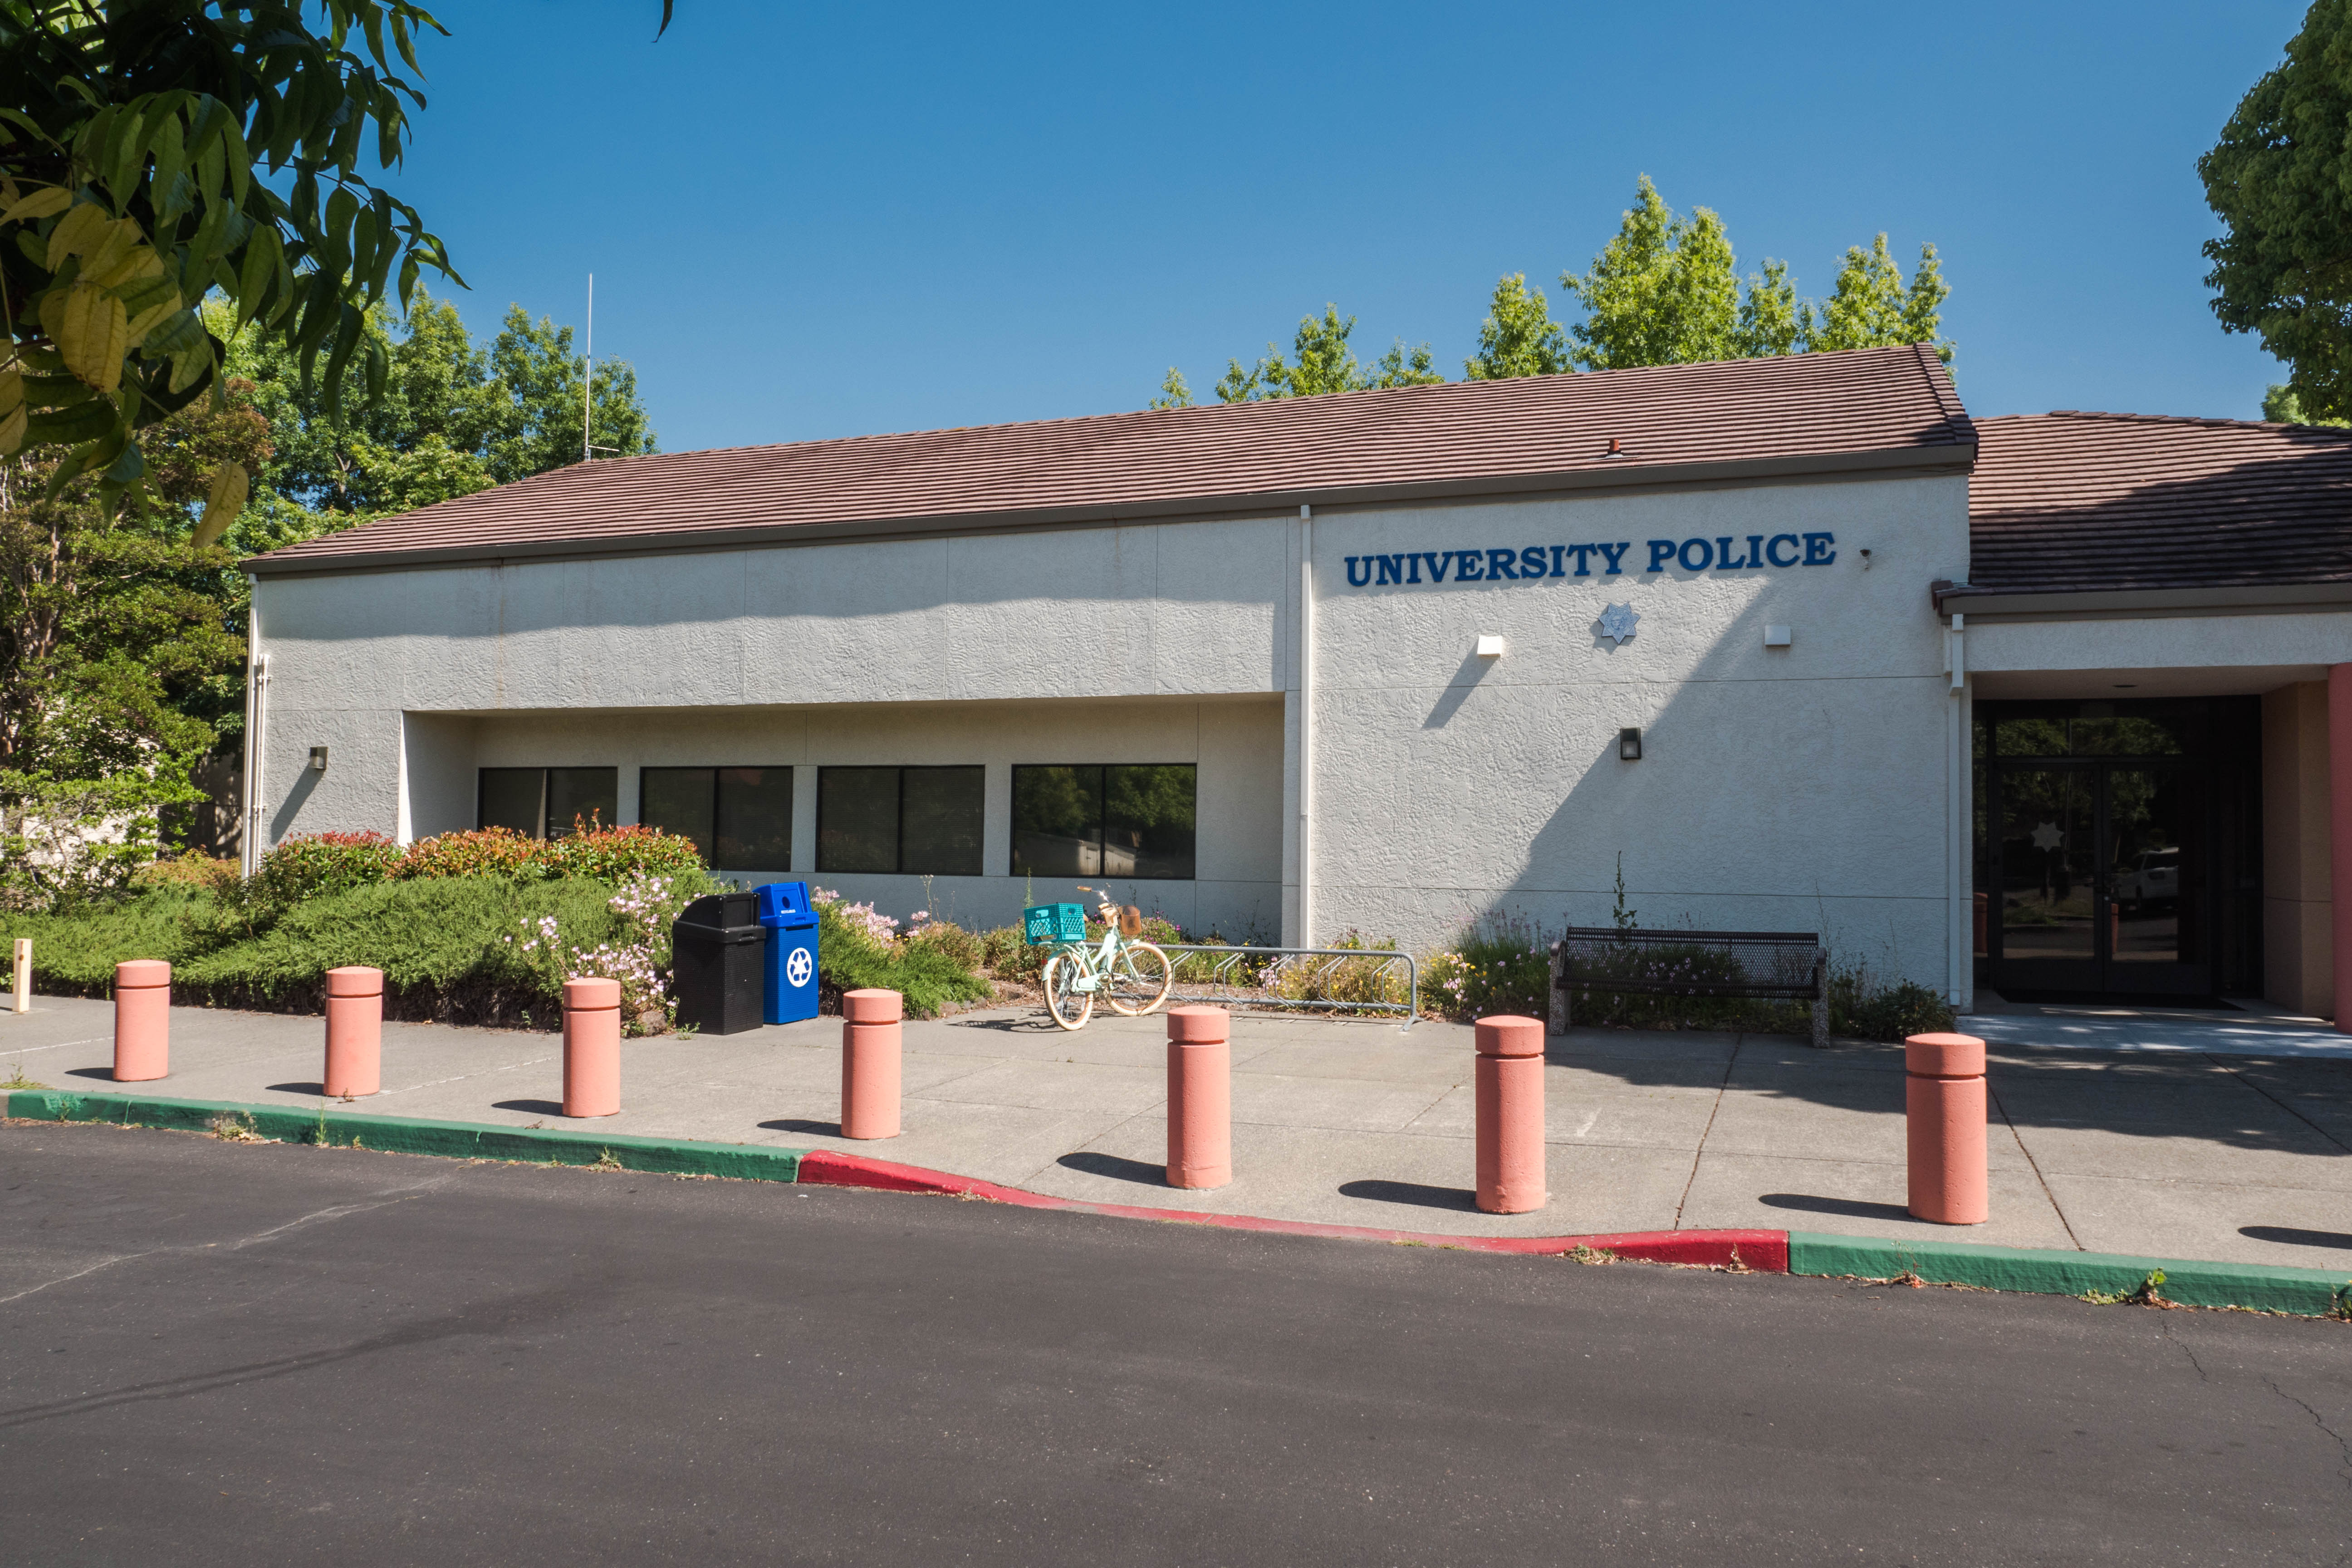 University police department building exterior